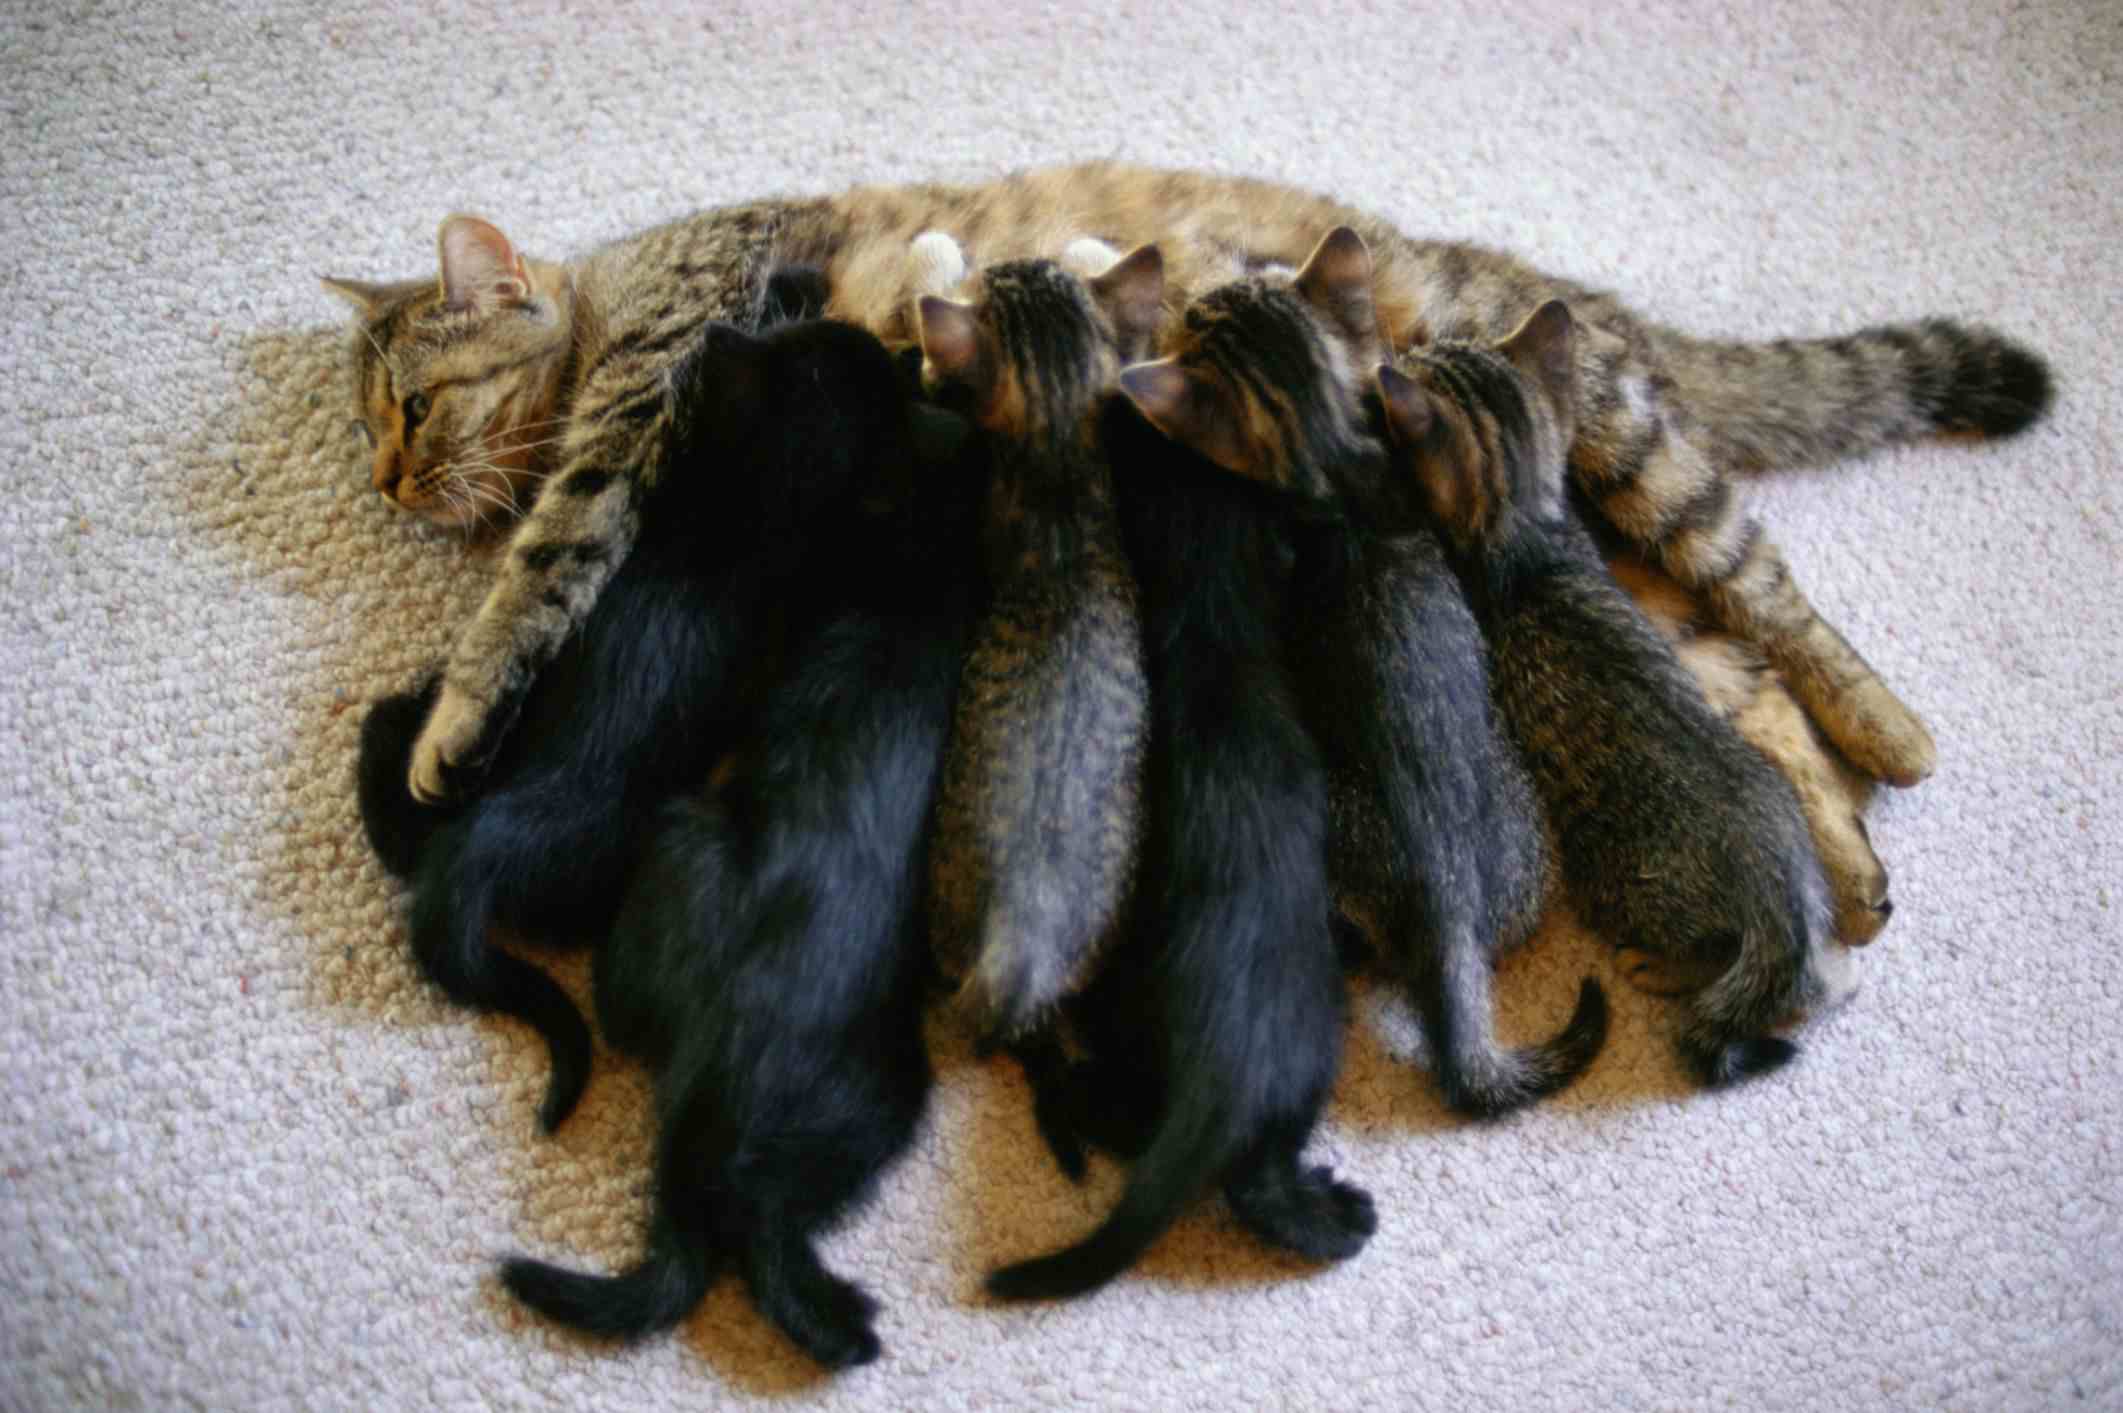 Photo of a Litter of Kittens Nursing